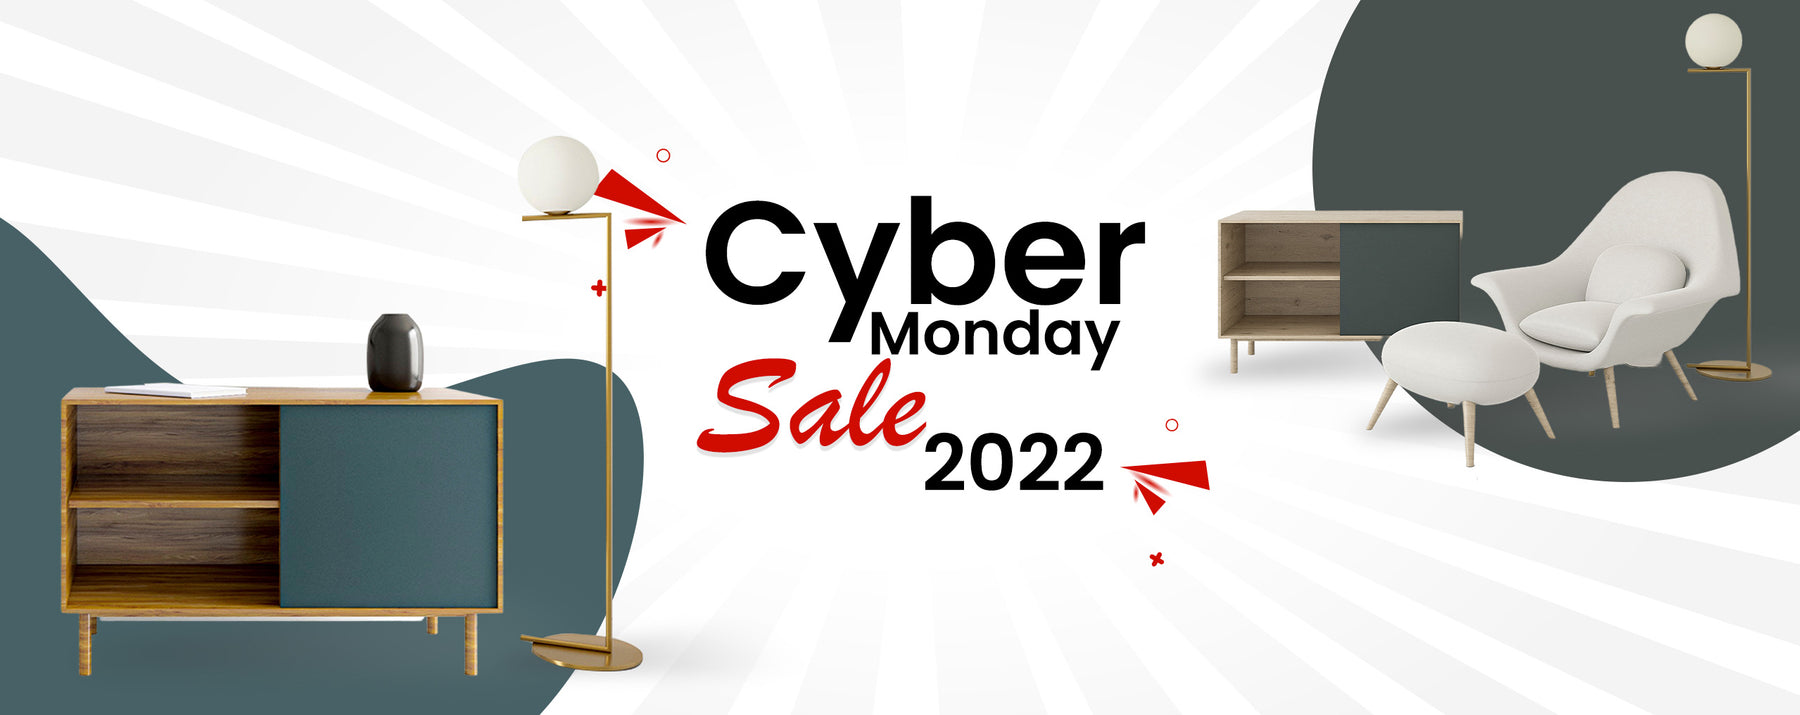 Cyber Monday Sale 2022